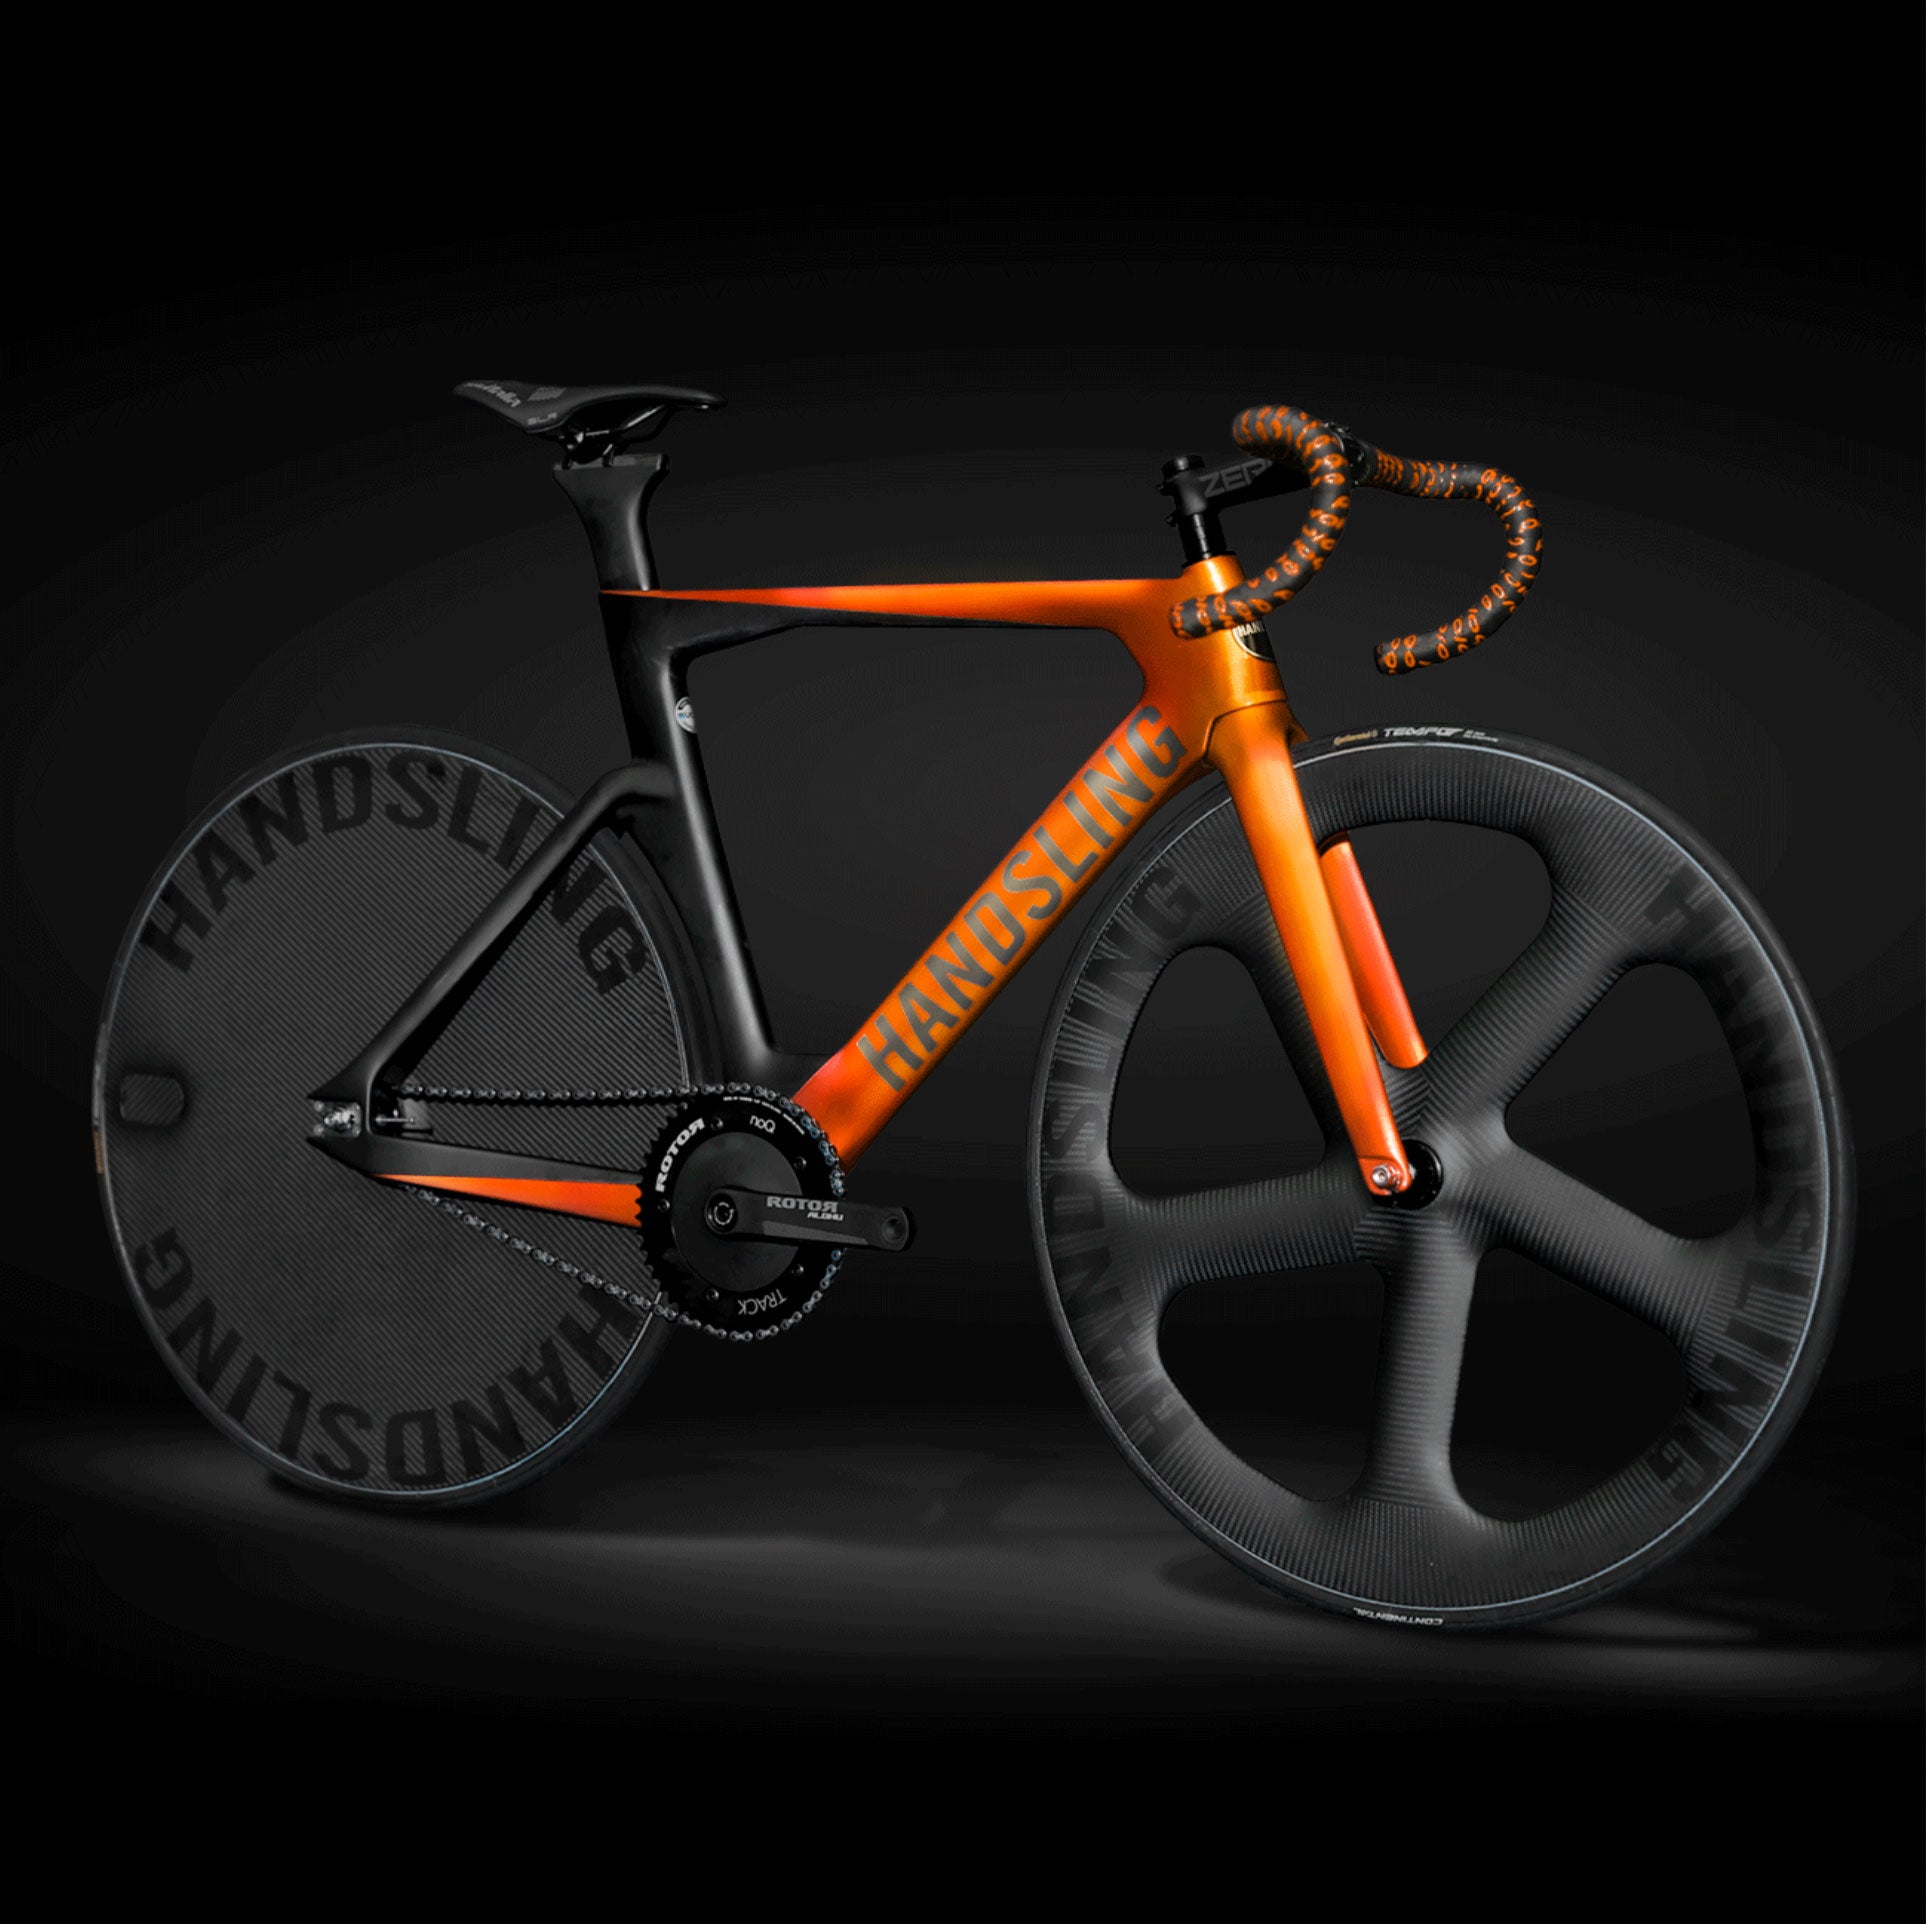 Handsling TR3evo: personaliza tu bicicleta